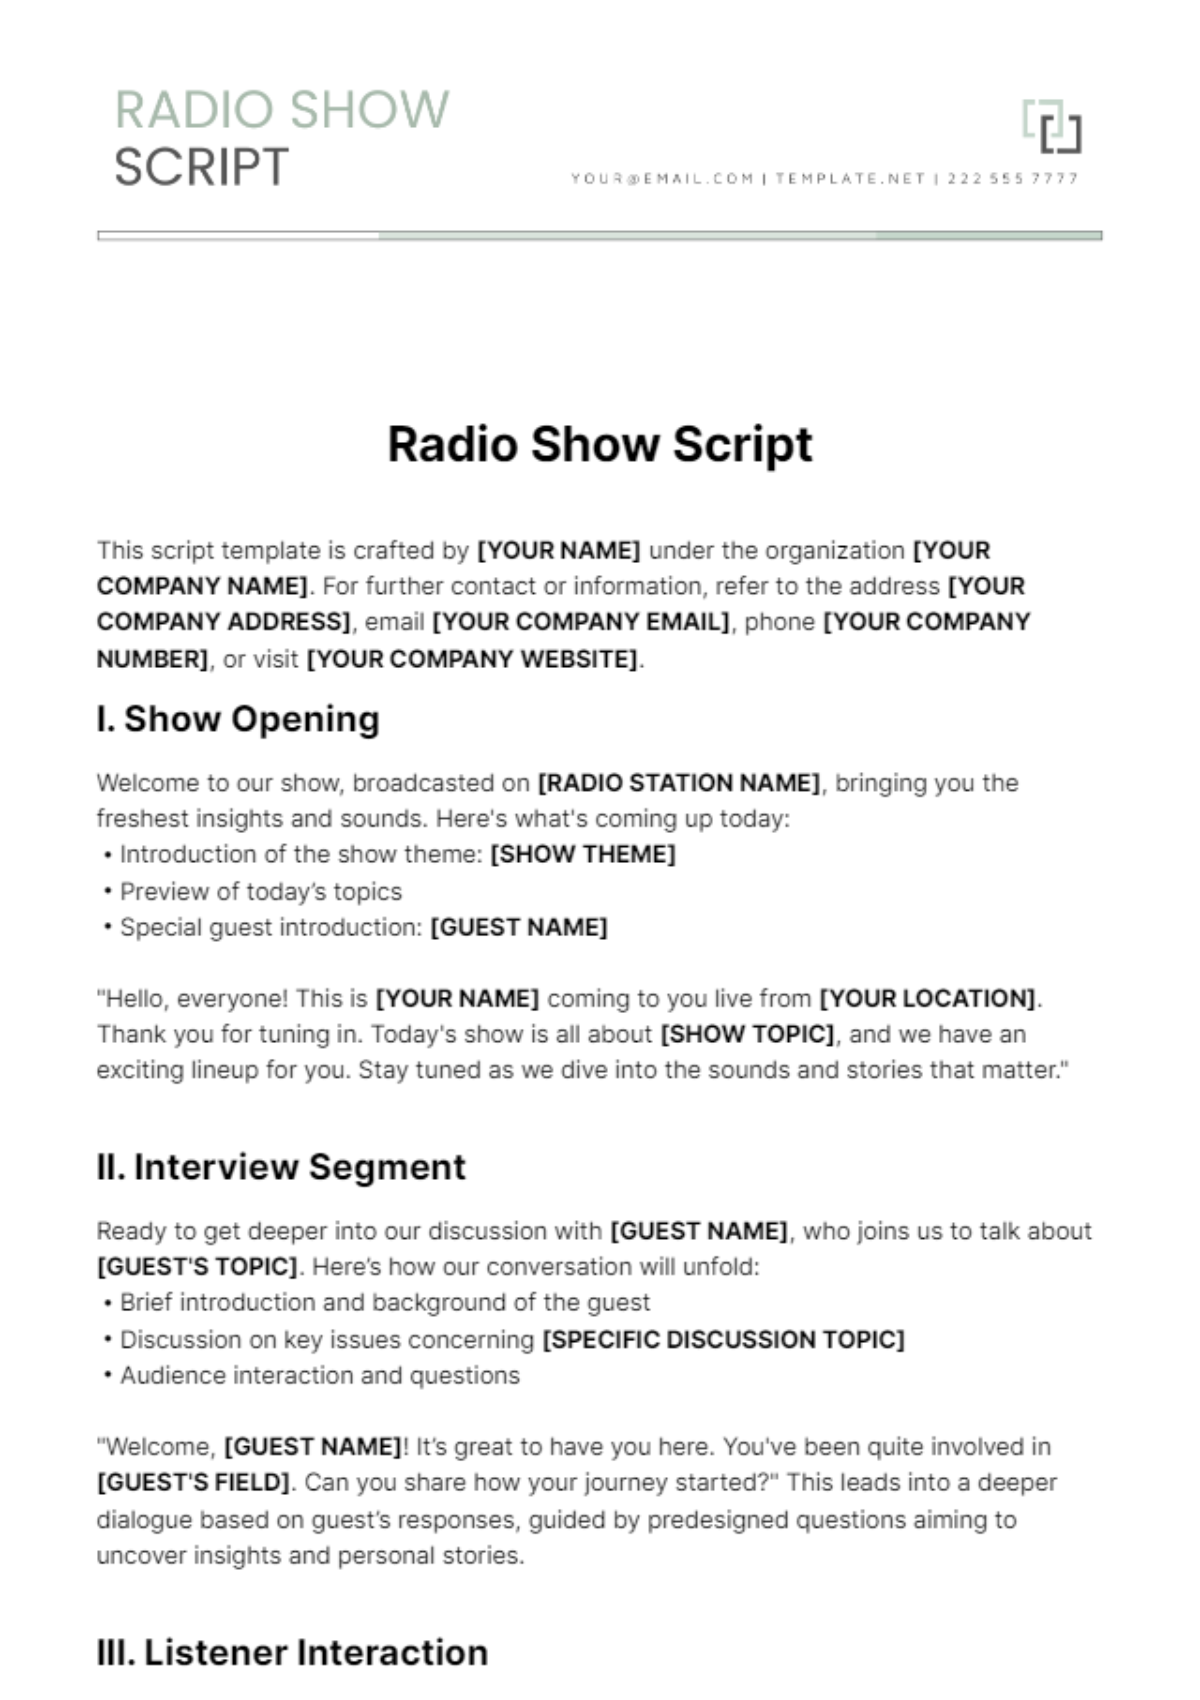 Radio Show Script Template